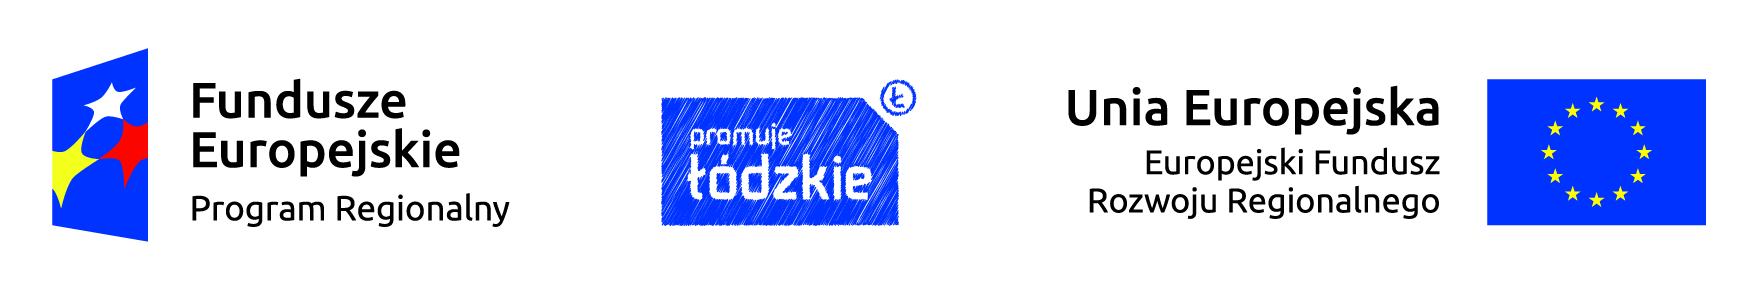 Logotyp FE